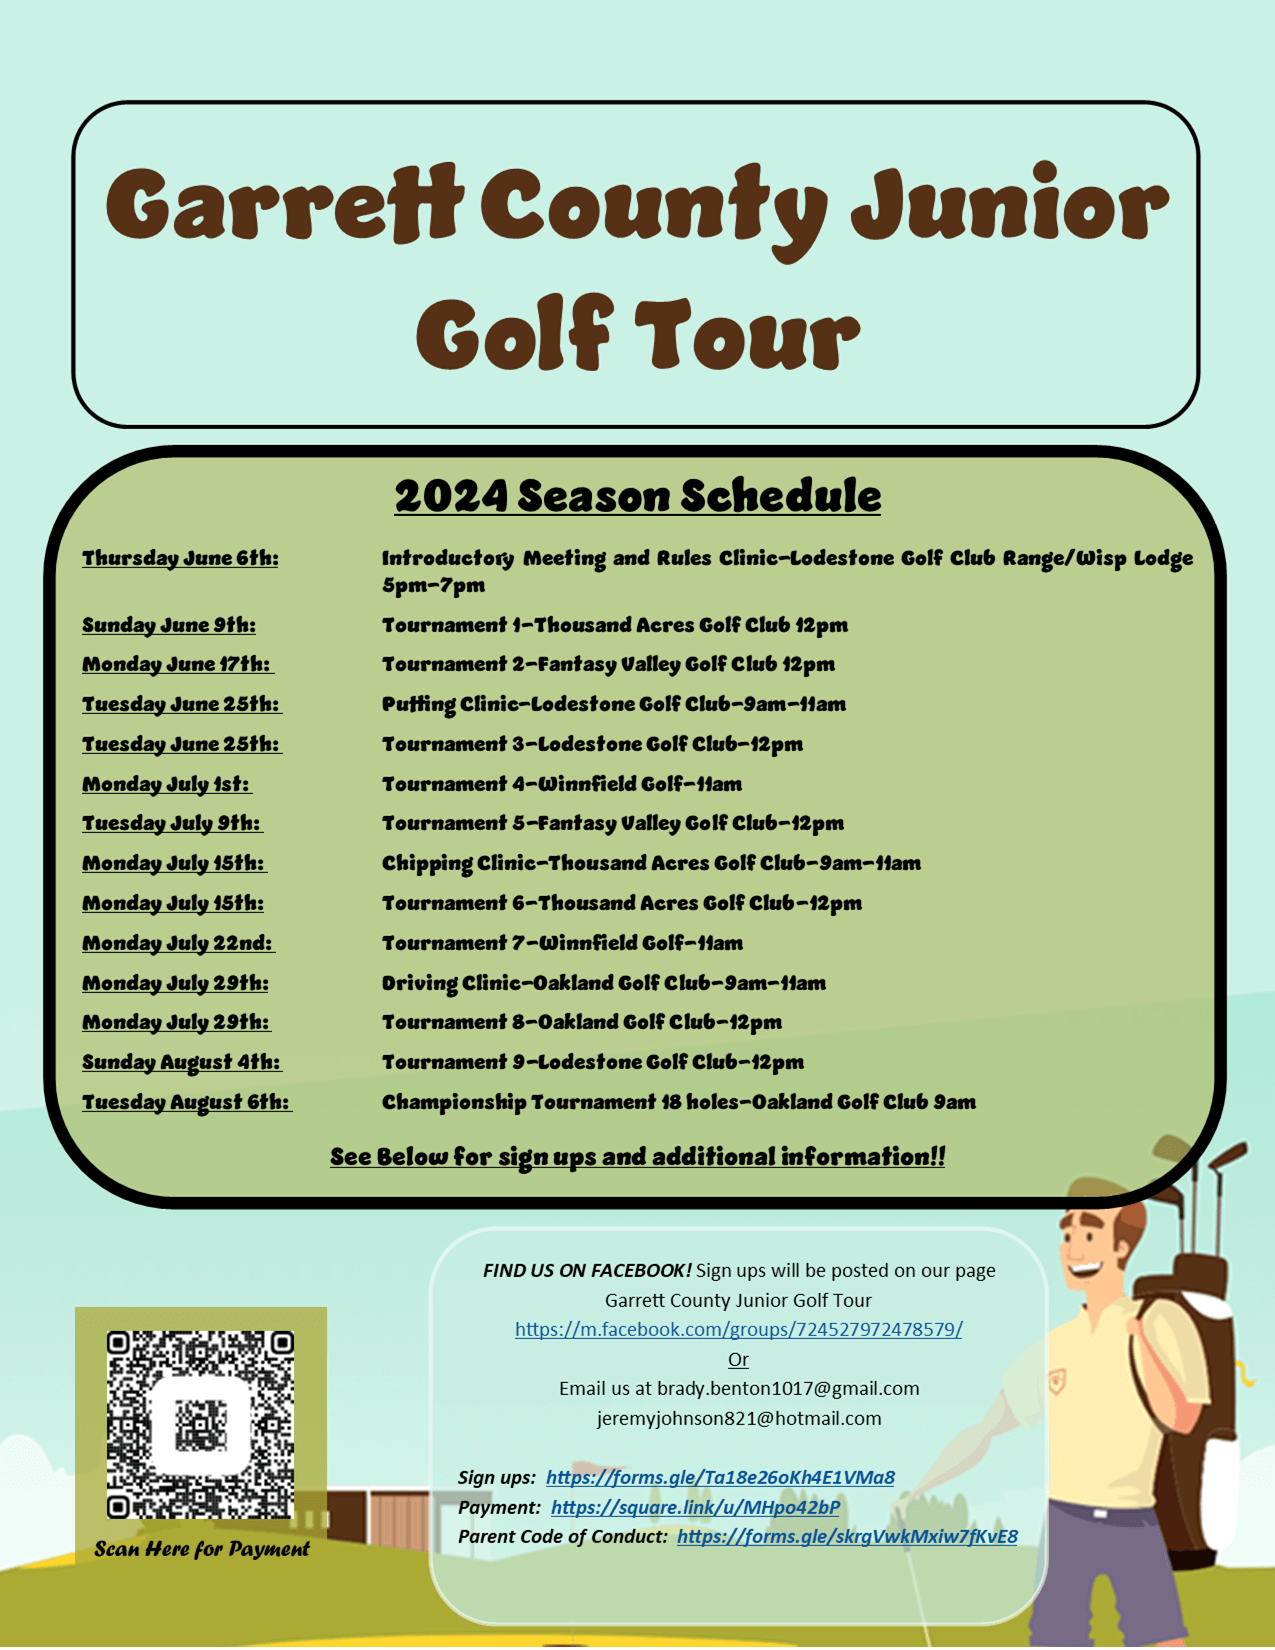 Garrett County Junior Golf Tour at Deep Creek Lake, MD